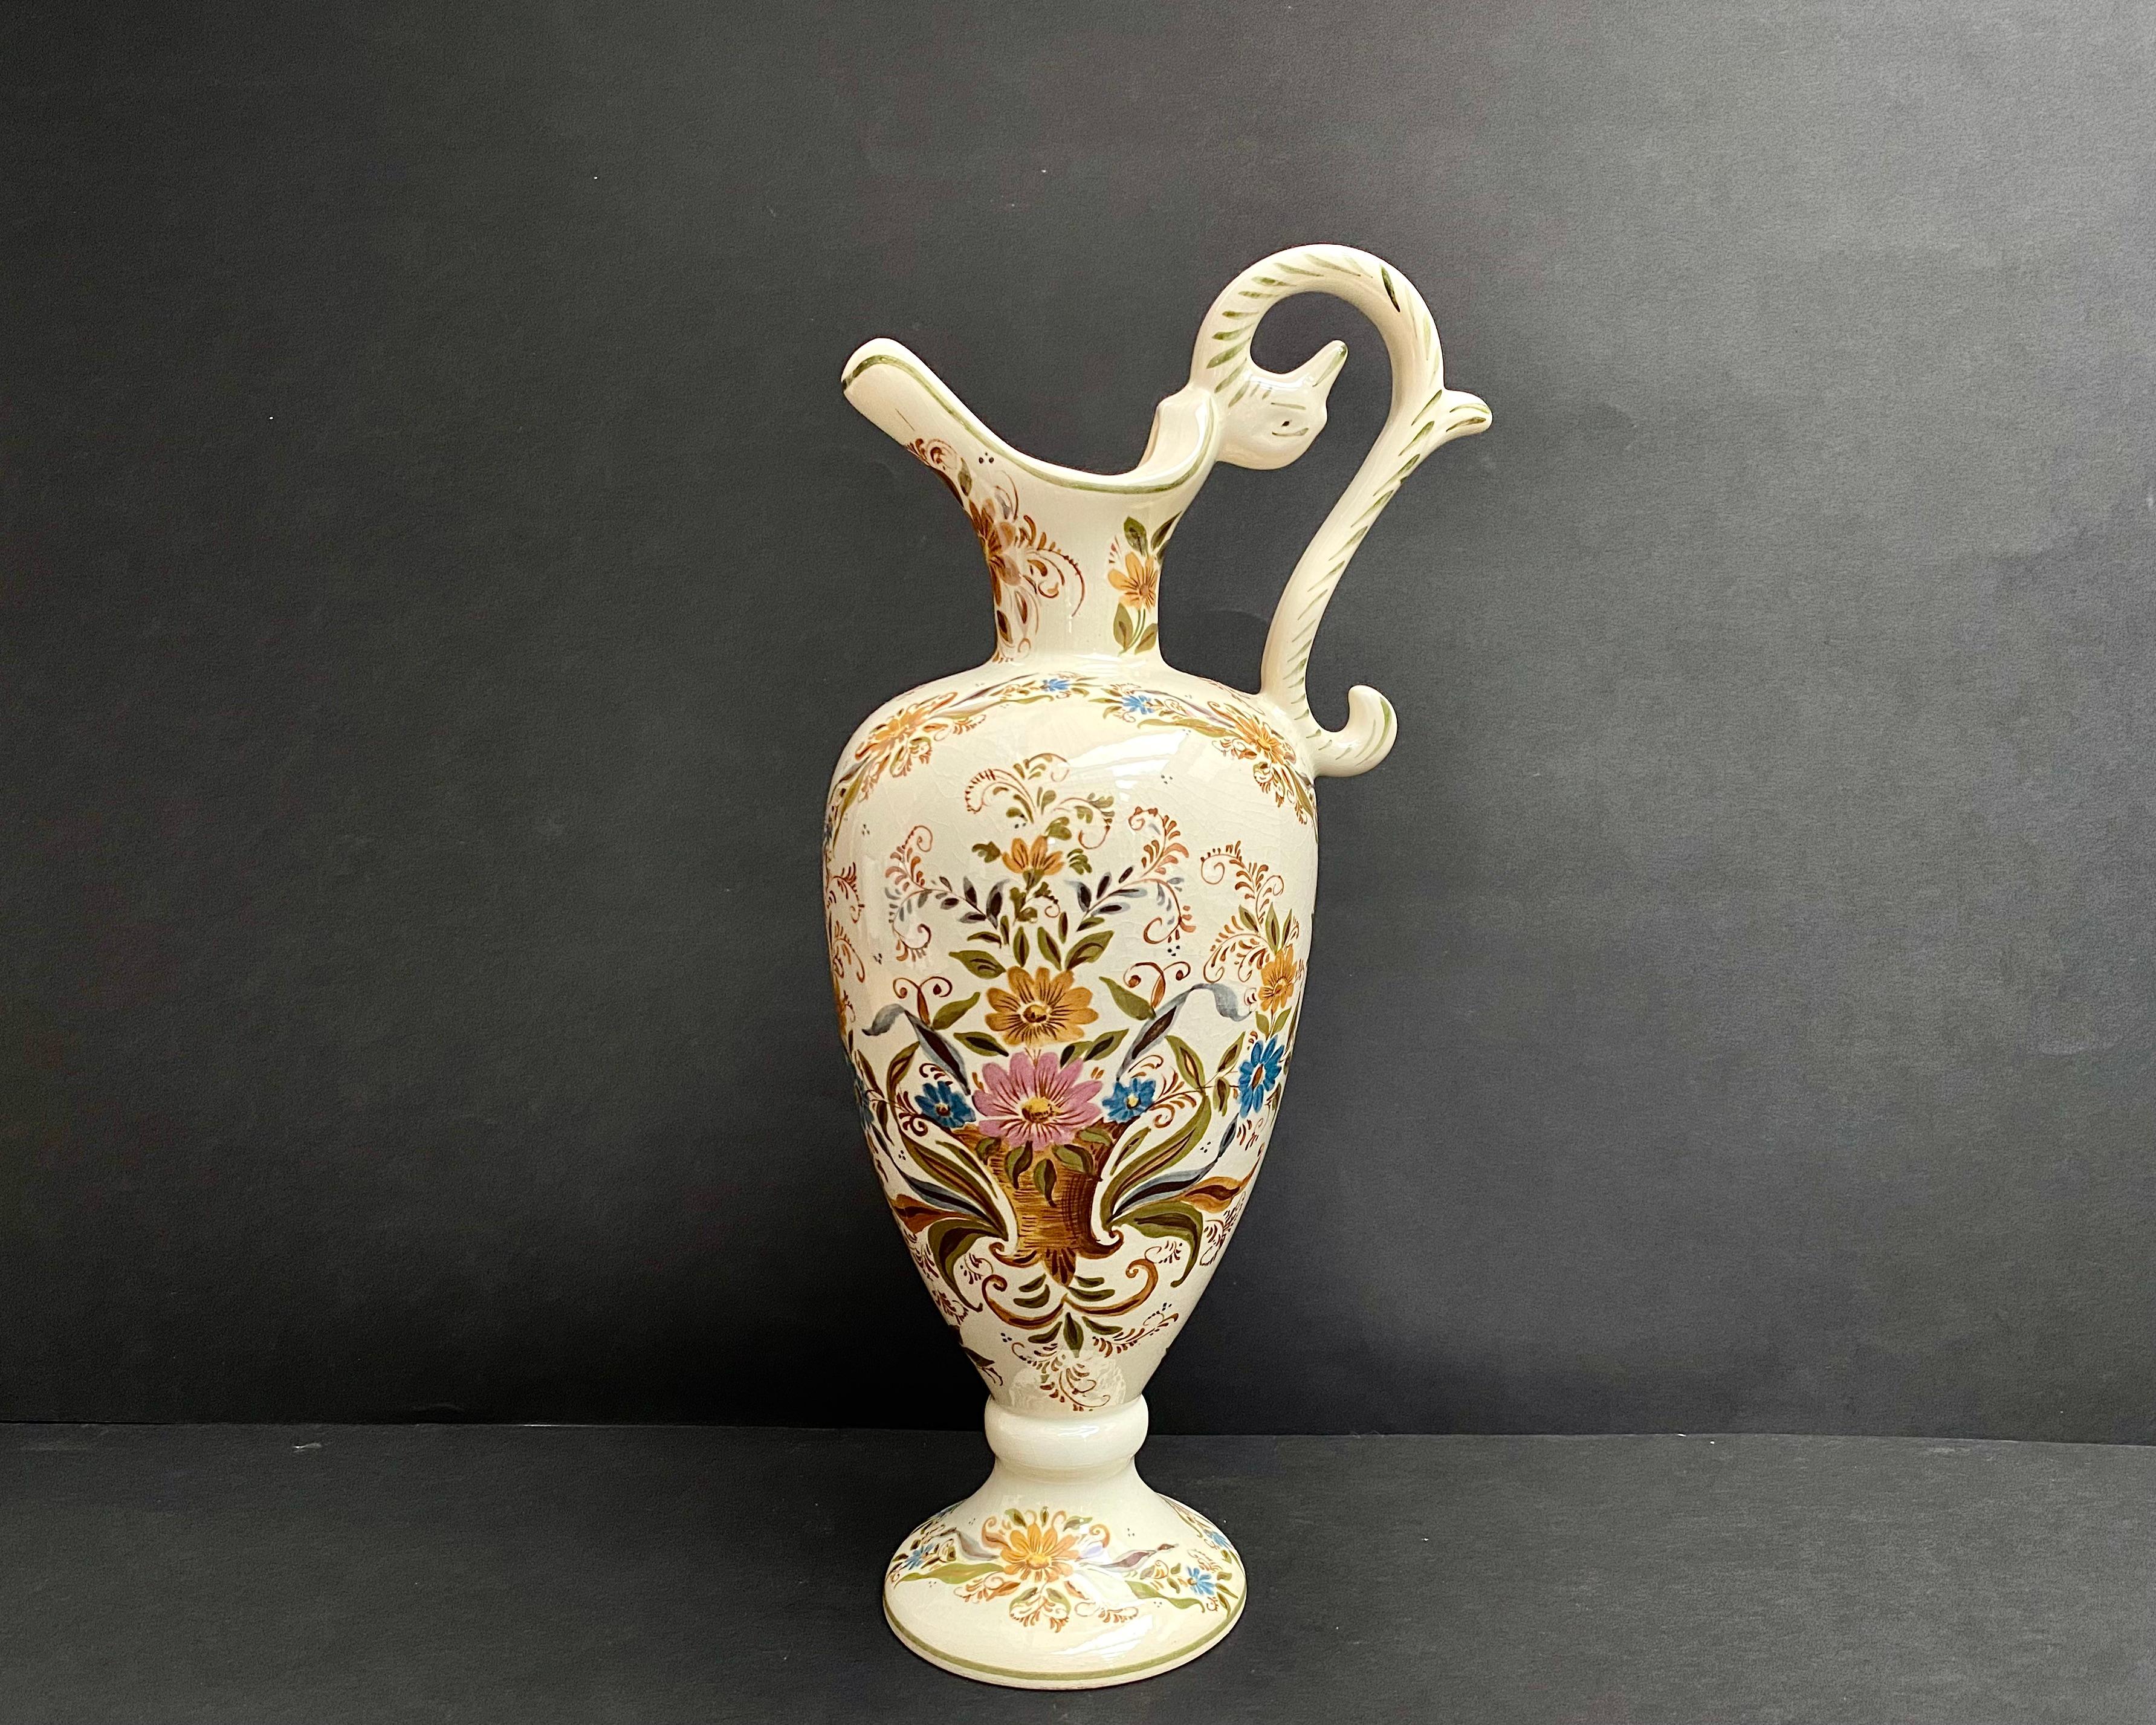 Vase Enamelled Ceramic Vintage Pitcher Hubert Bequet, Belgium, 1950s For Sale 1